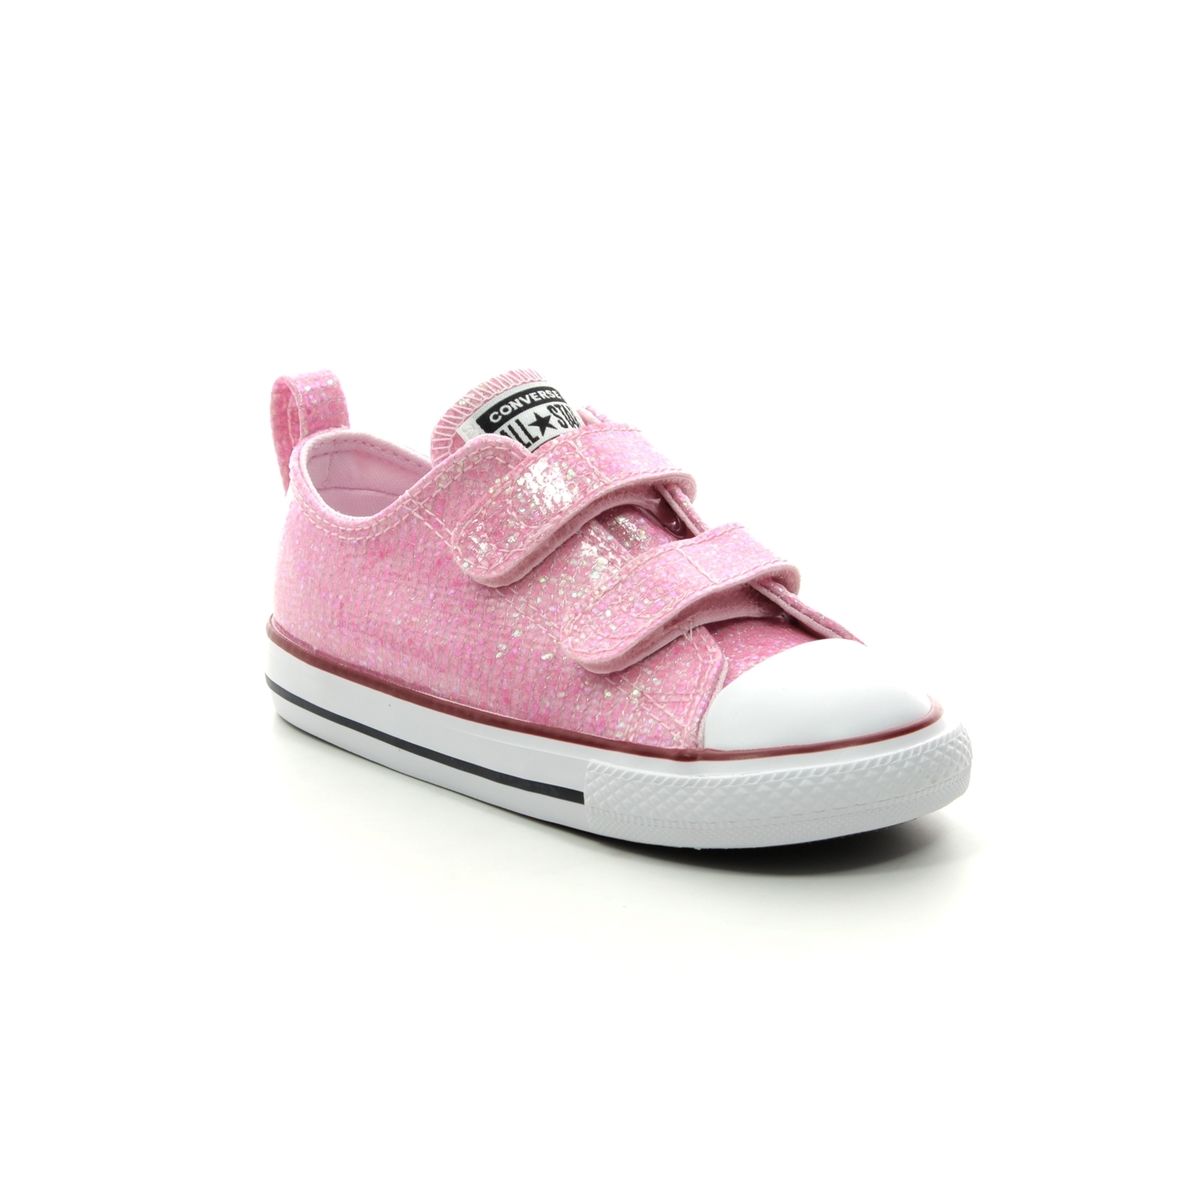 pink velcro converse toddler